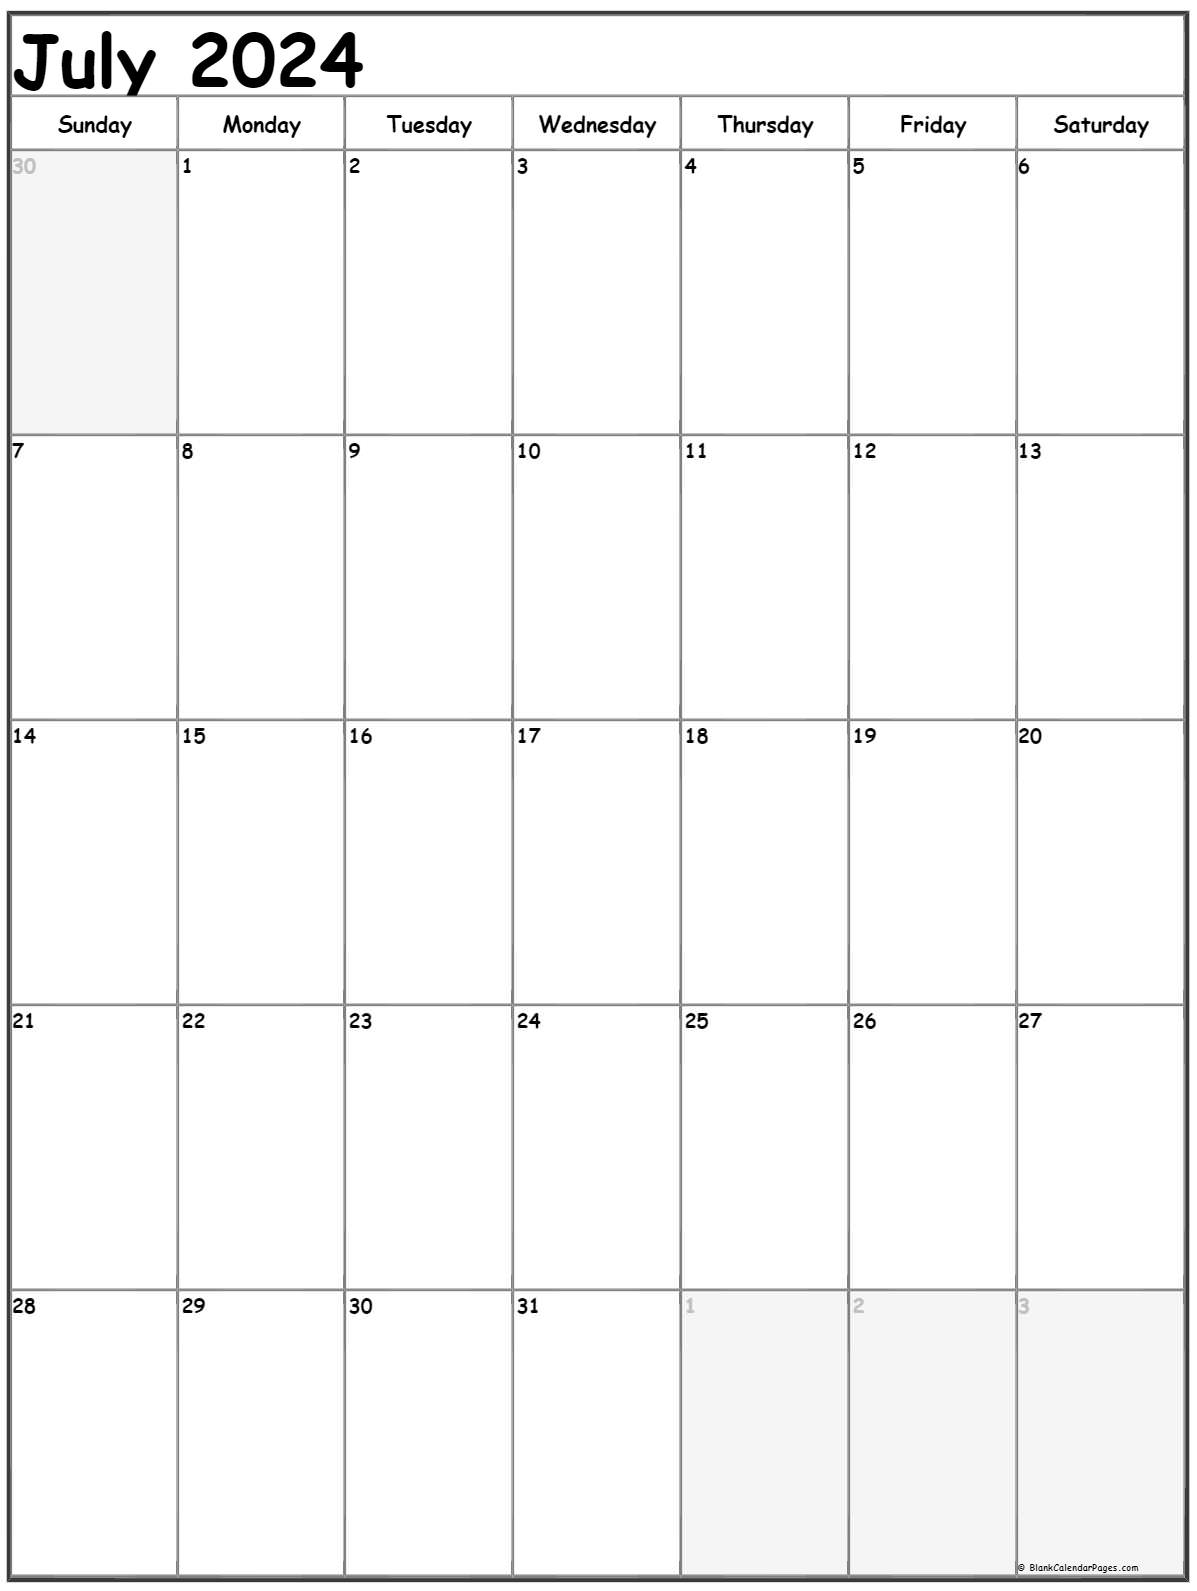 july-2023-vertical-calendar-portrait